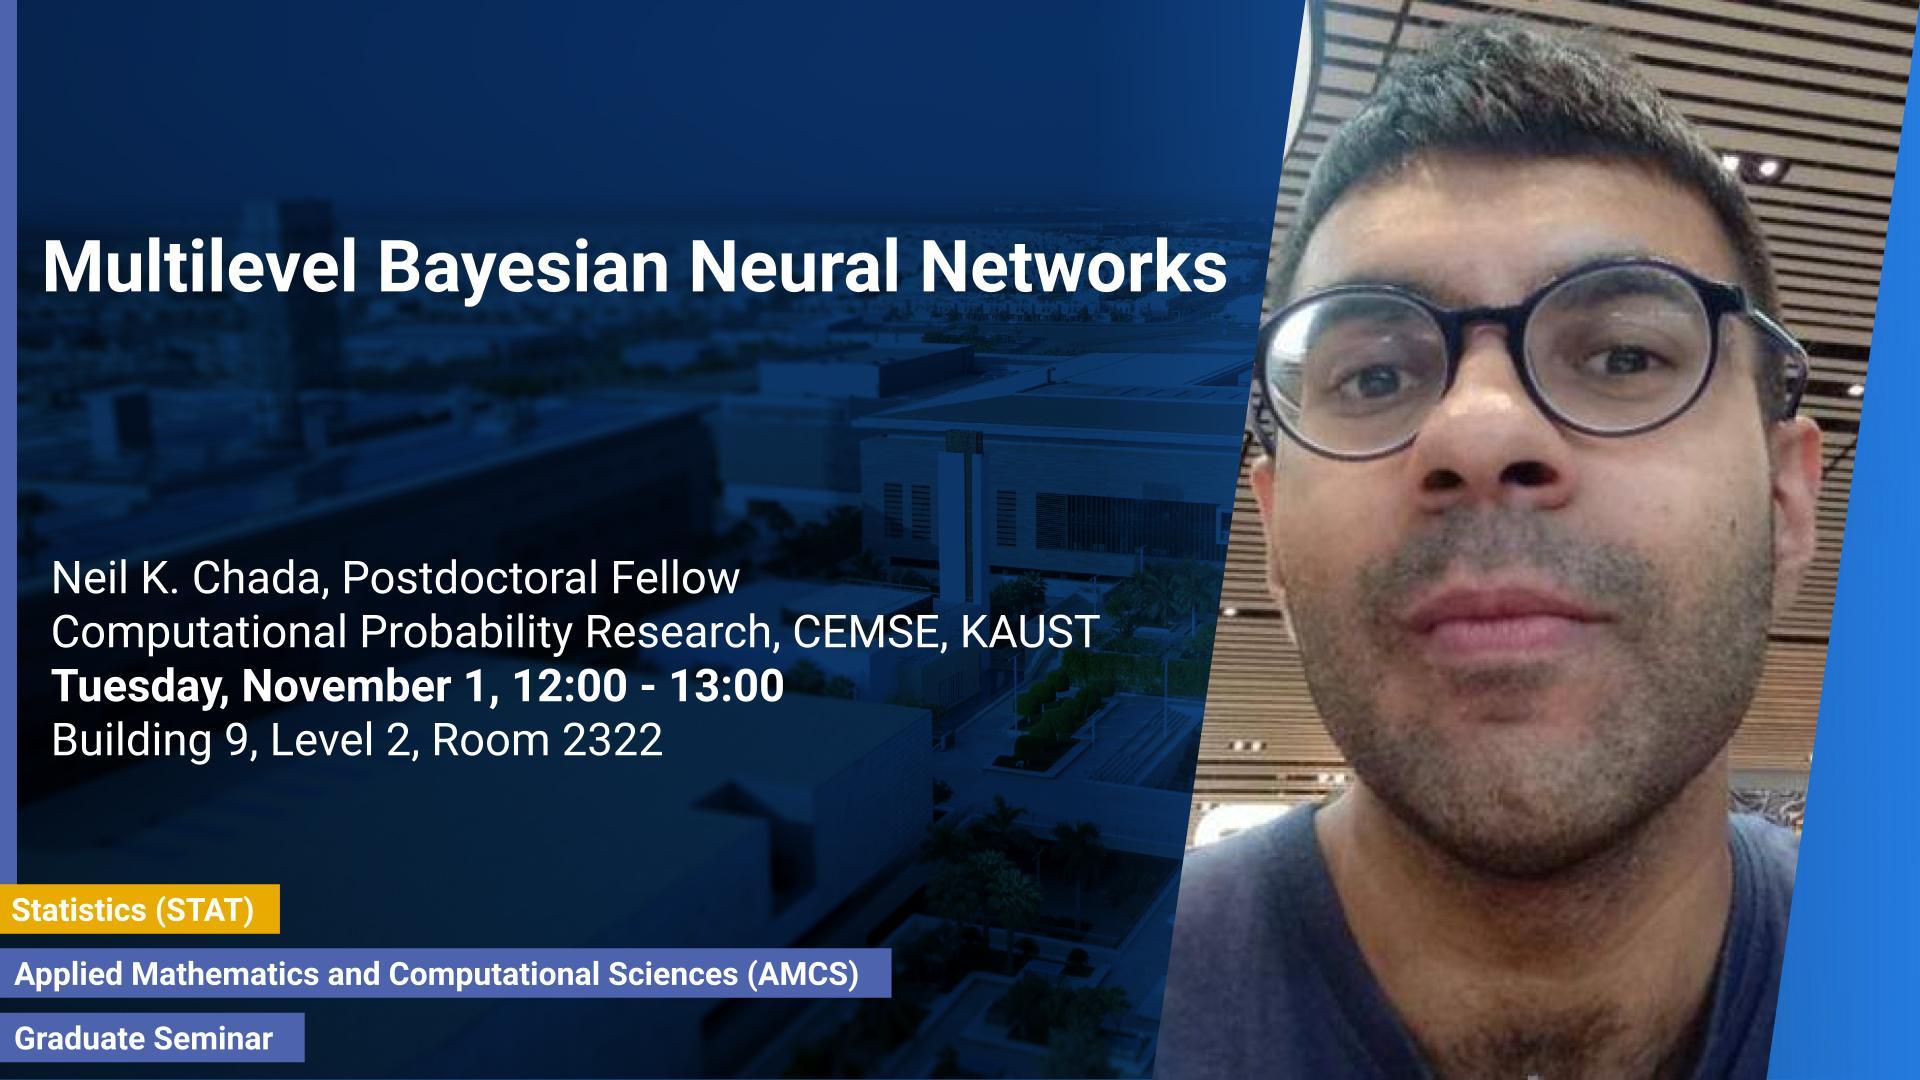 KAUST-CEMSE-STAT-AMCS-Graduate Seminar-Multilevel Bayesian-Neural Networks